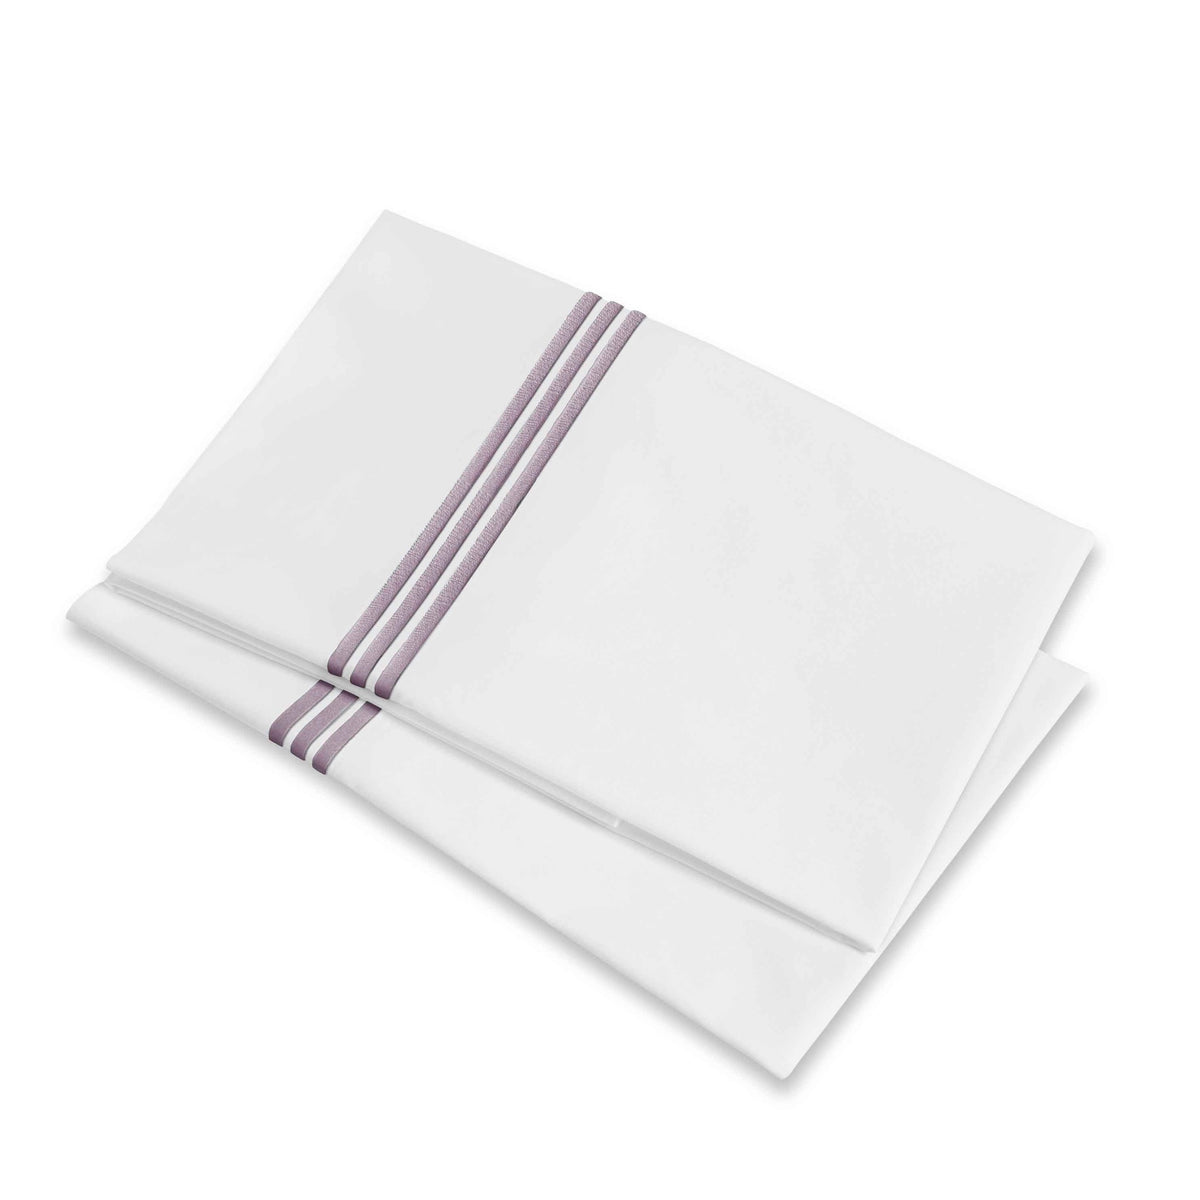 Folded Pillowcases of Signoria Platinum Percale Bedding in White/Thisle Color